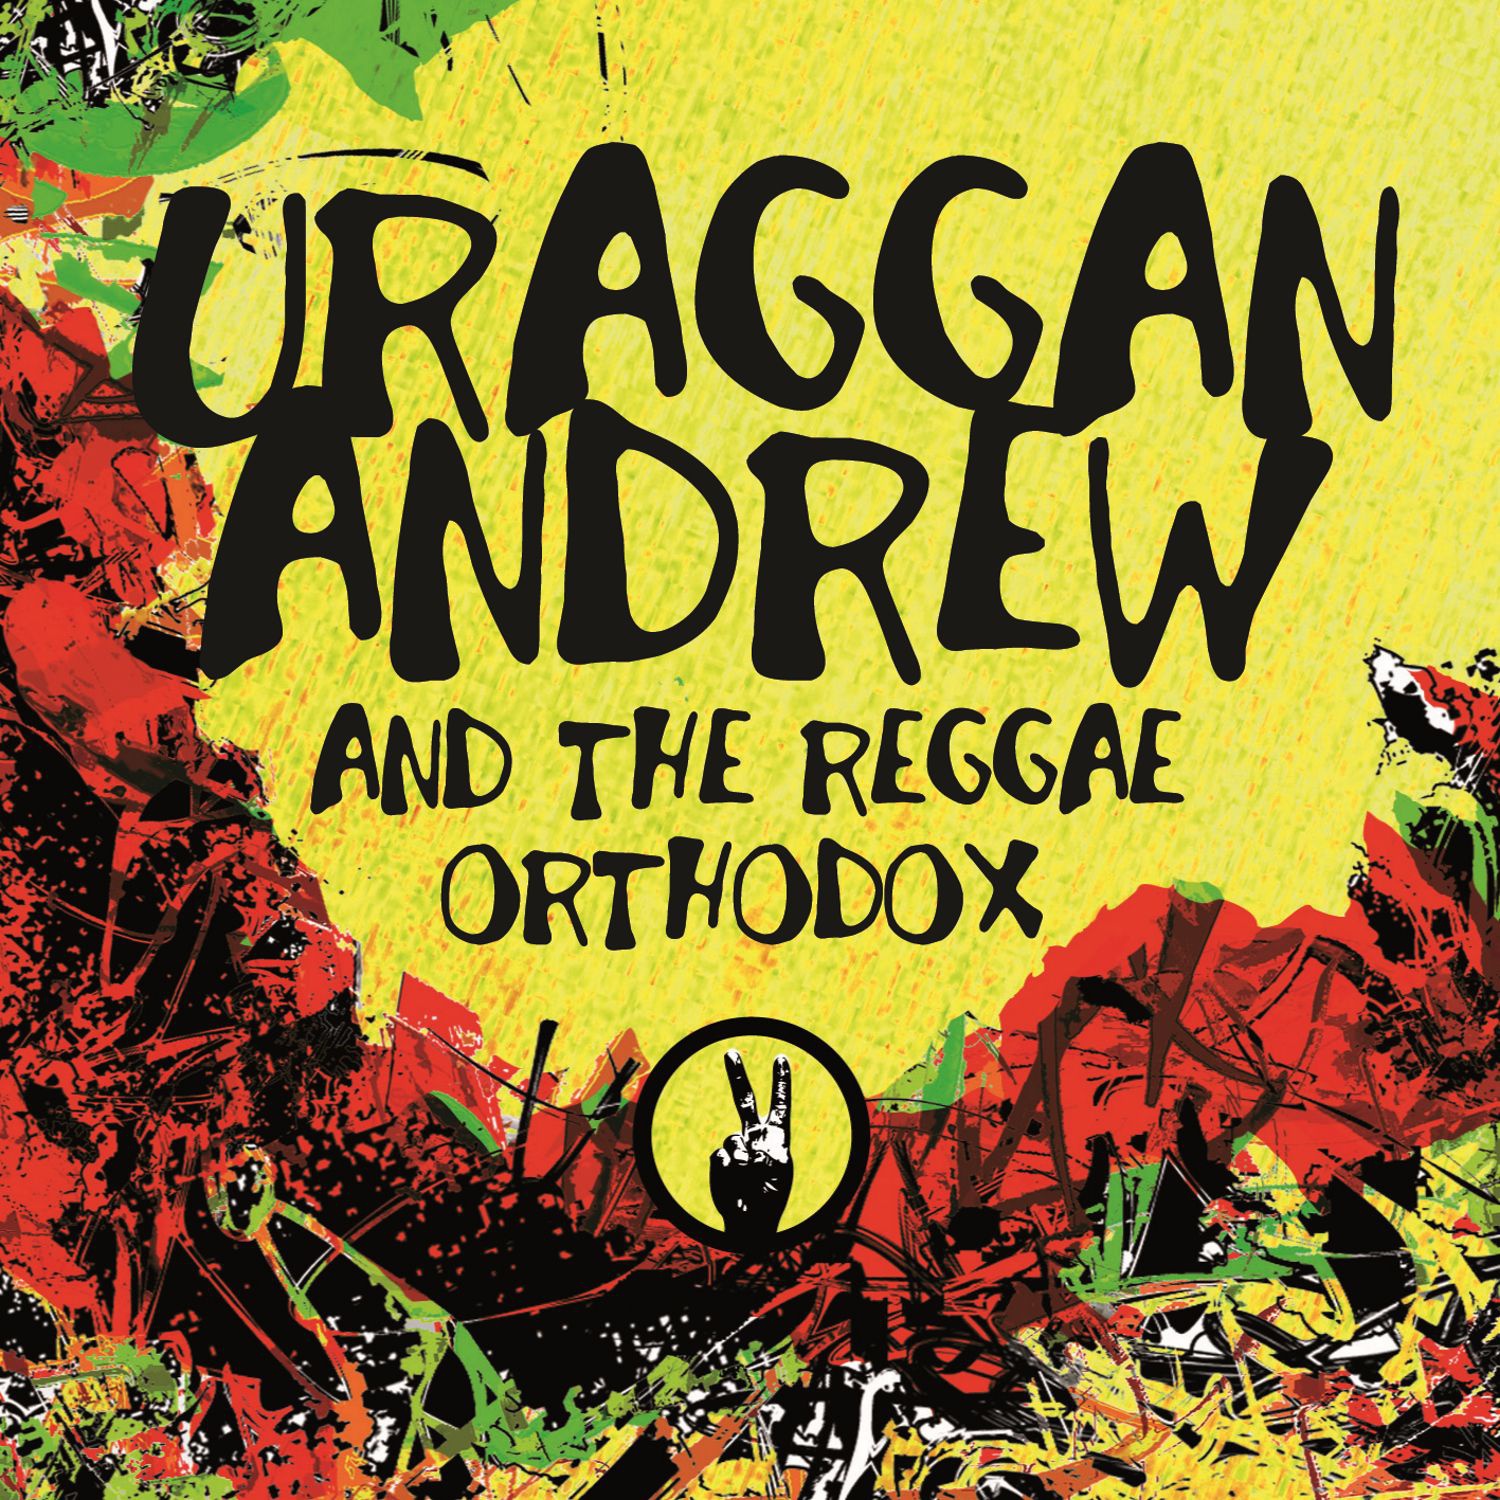 CD Shop - URAGGAN ANDREW AND THE REGGAE II